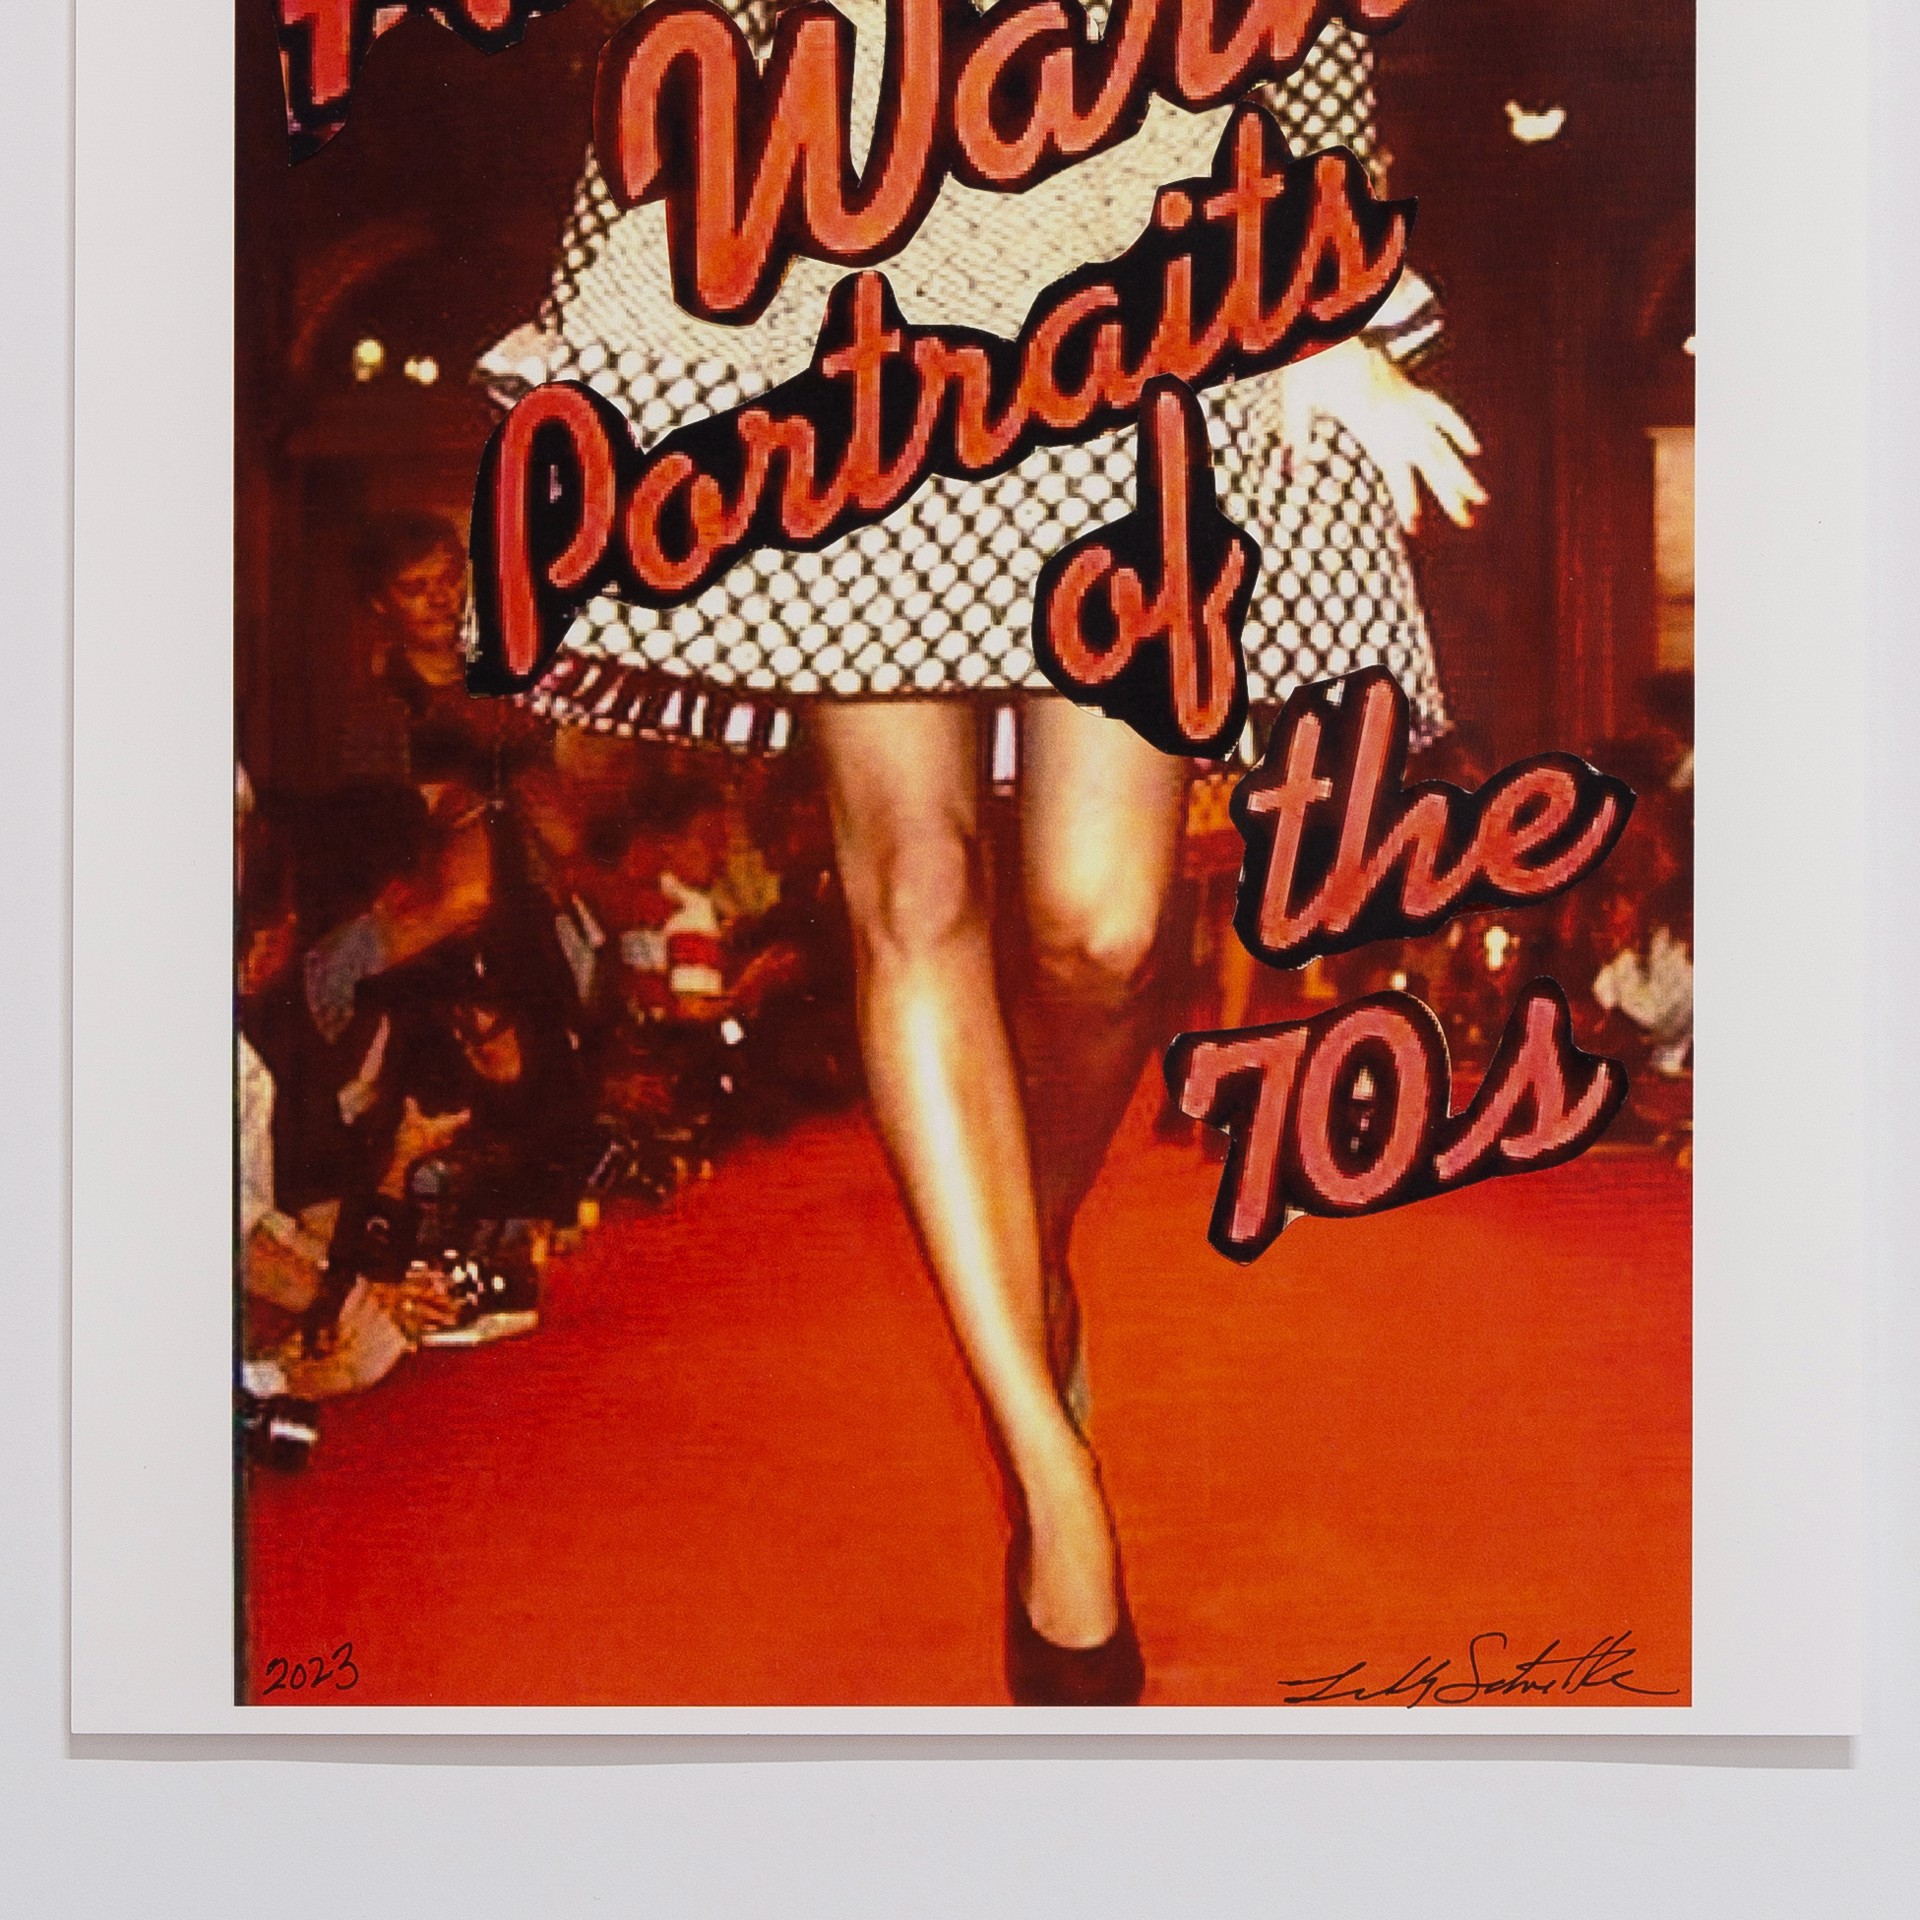 Andy Warhol Portraits of the 70s by PhoebeNewYork